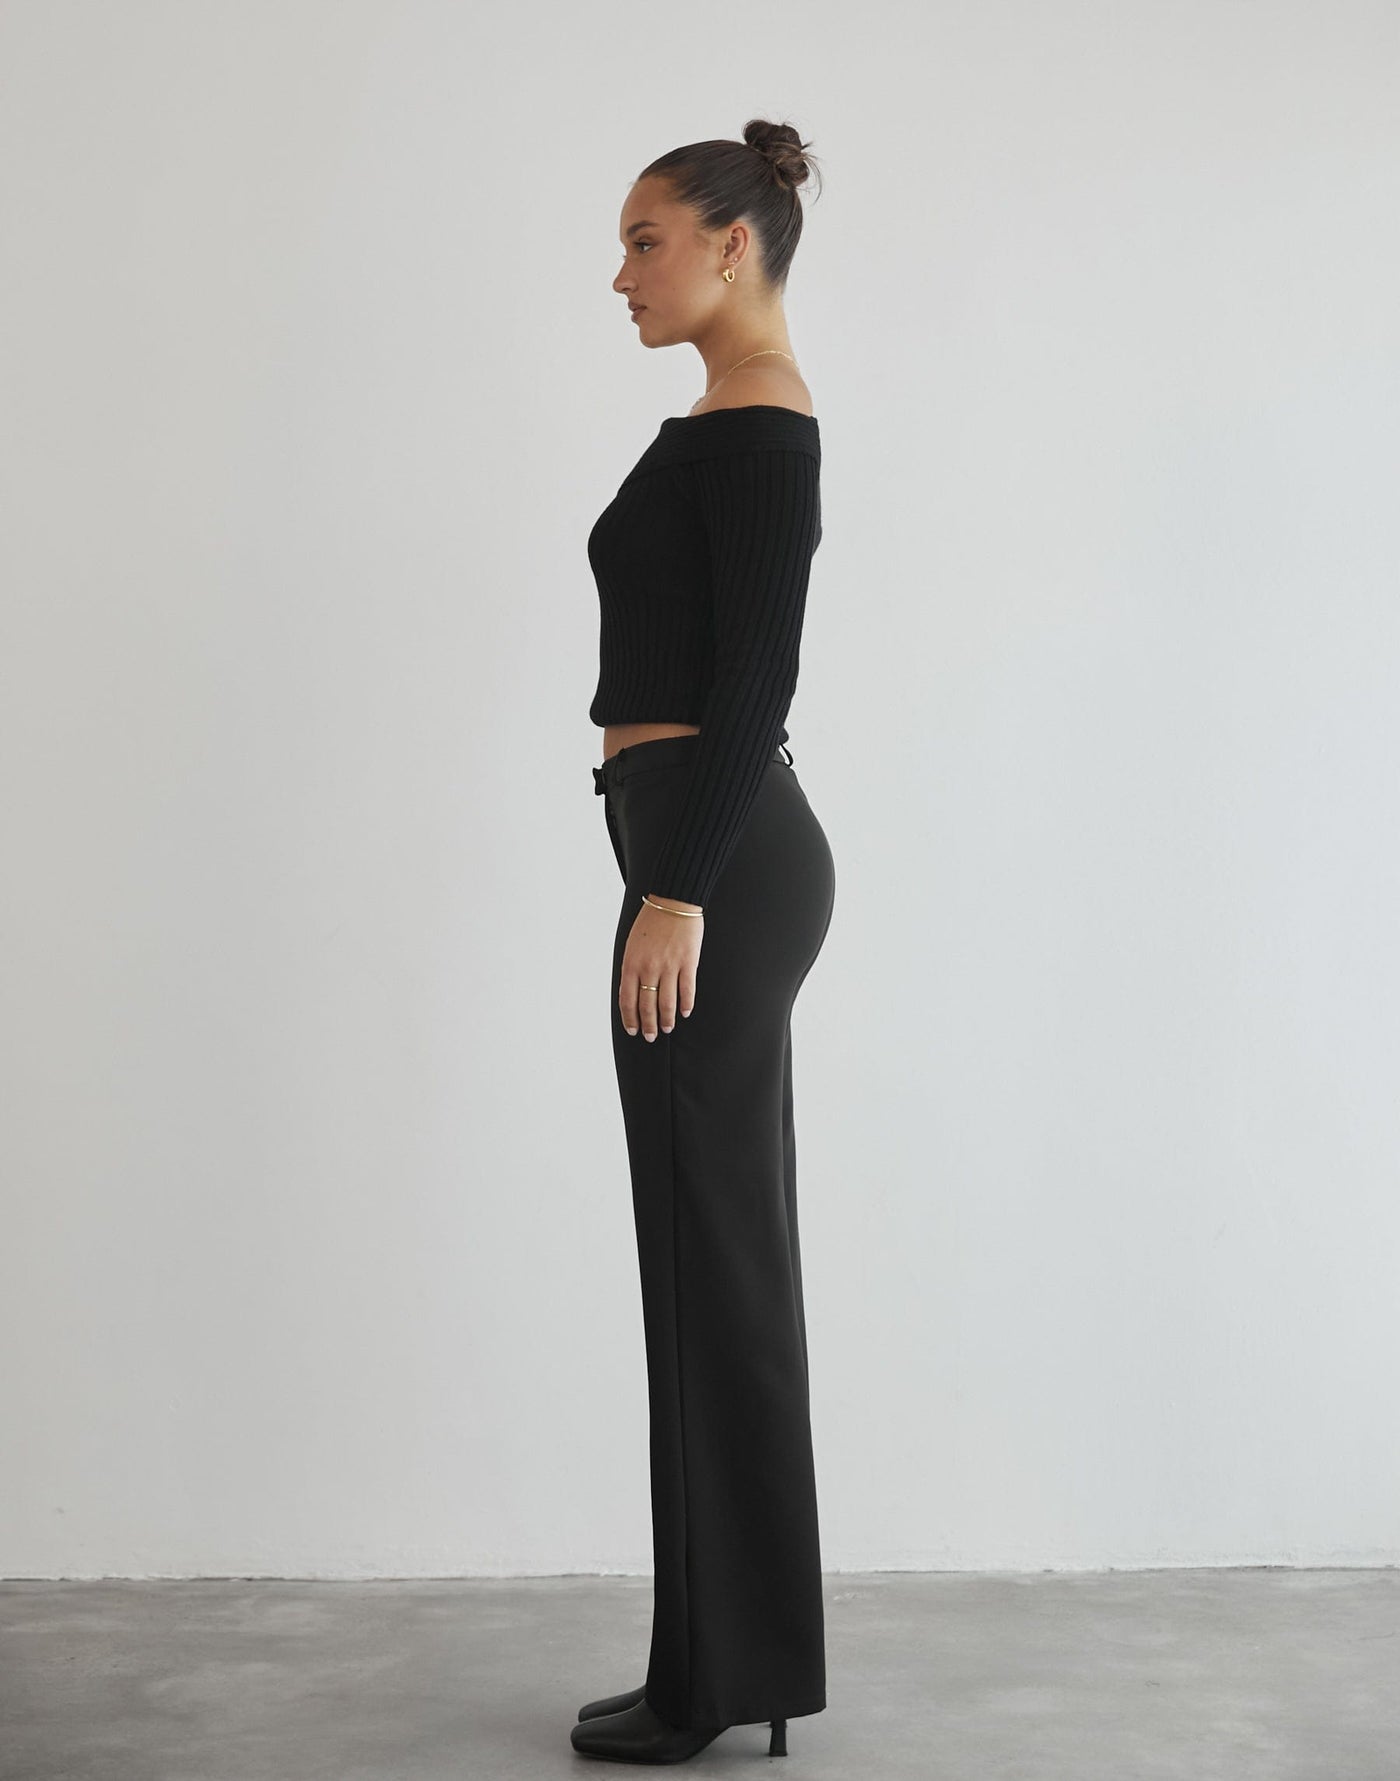 Madon Long Sleeve Knit Top (Black) - Black Long Sleeve Knit Top - Women's Top - Charcoal Clothing